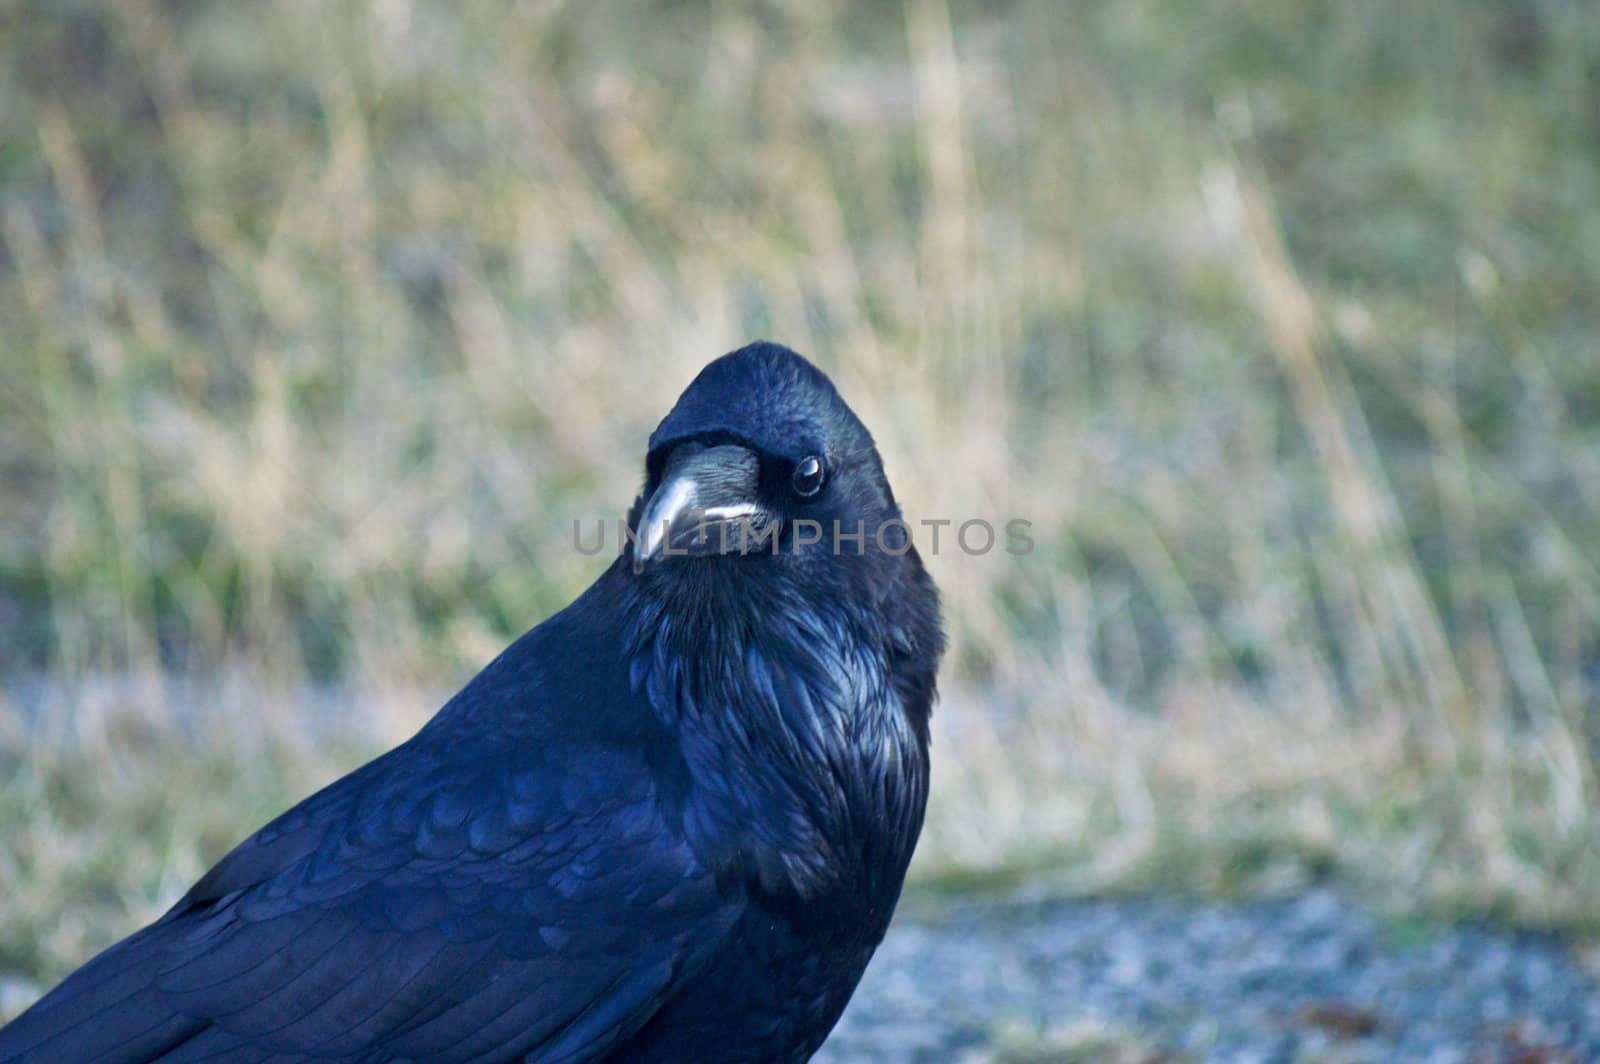 Raven in Profile by emattil